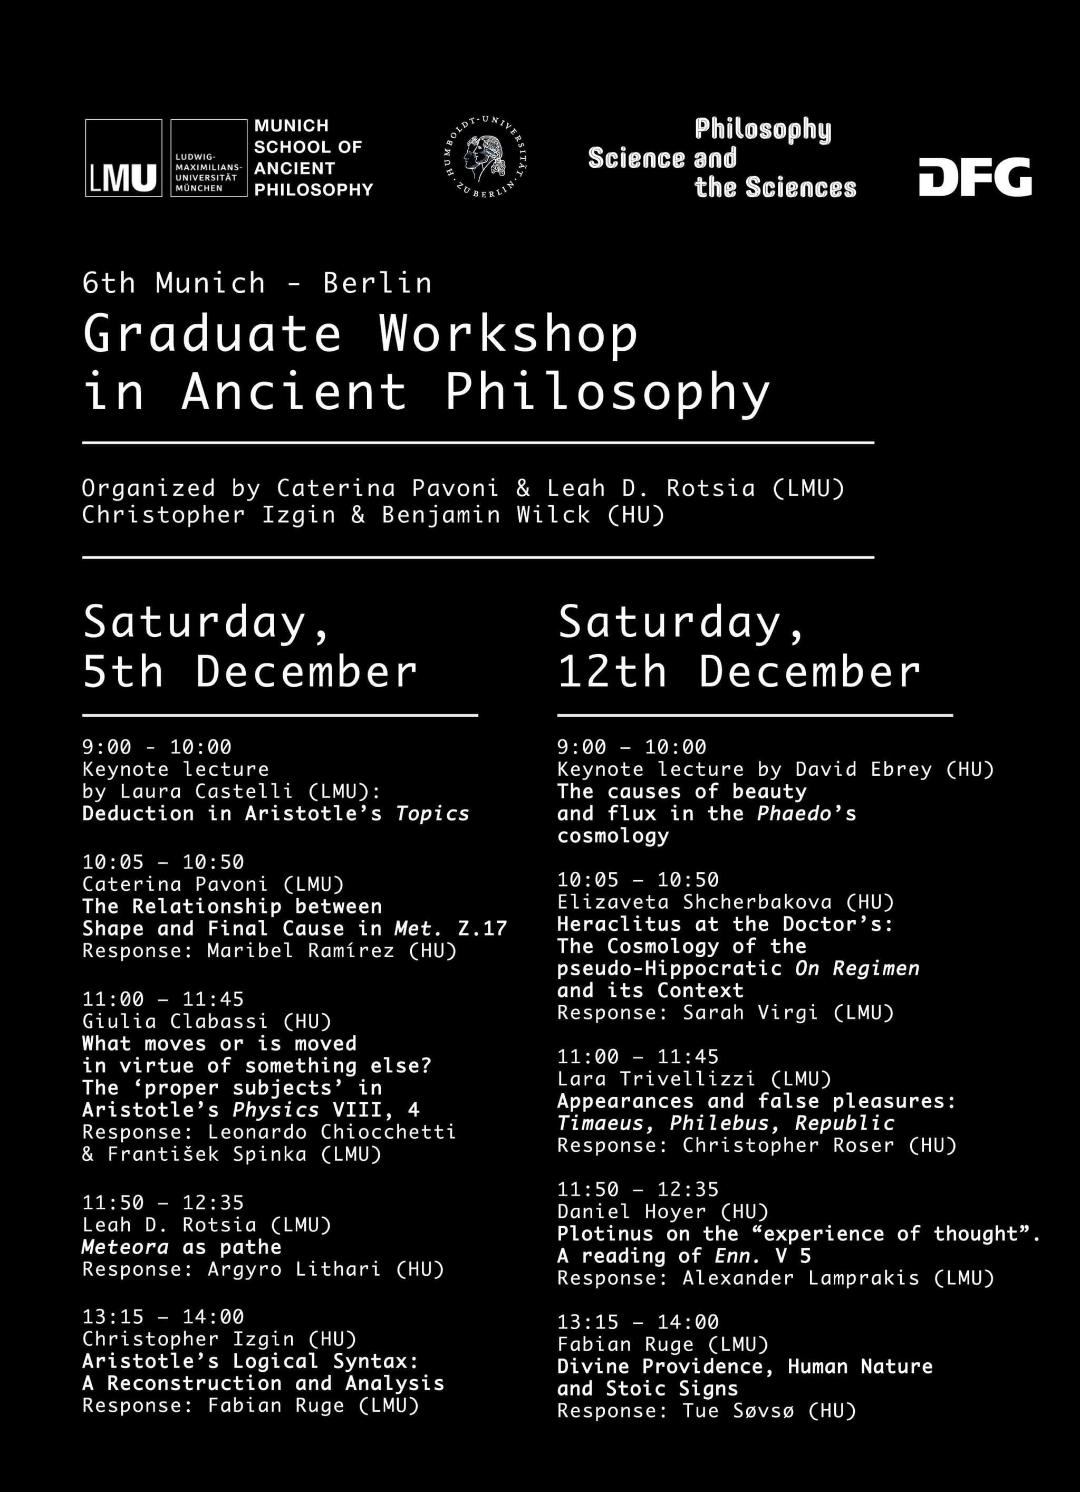 Program 6th Munich-Berlin Graduate Workshop in Ancient Philosophy